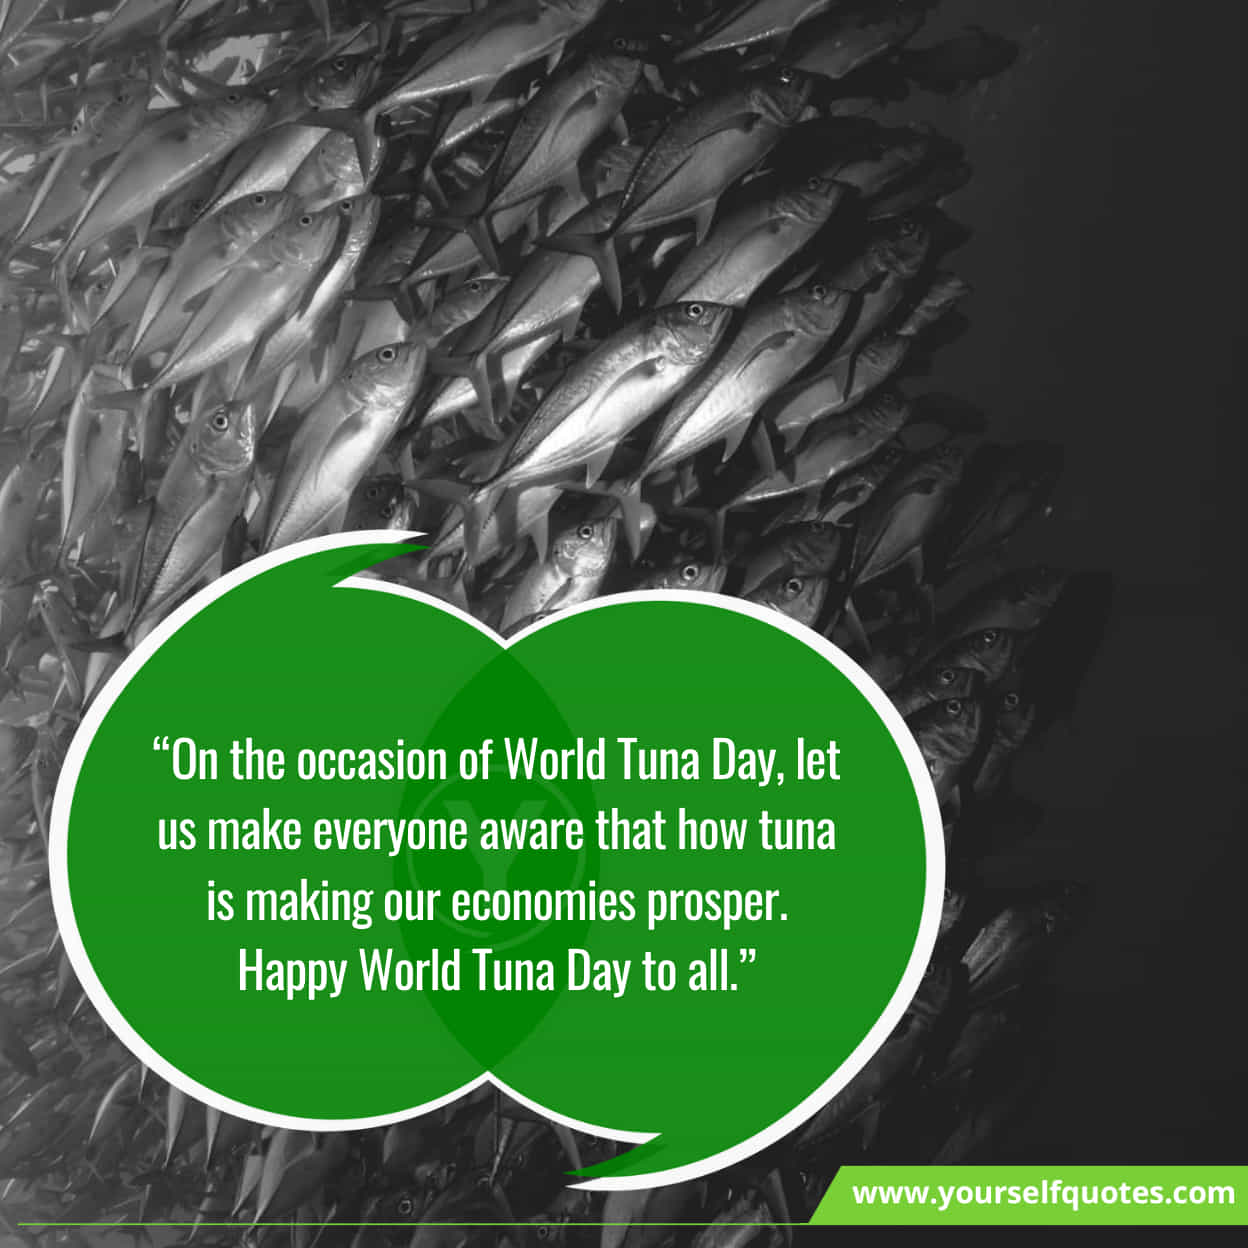 World Tuna Day Wishes 